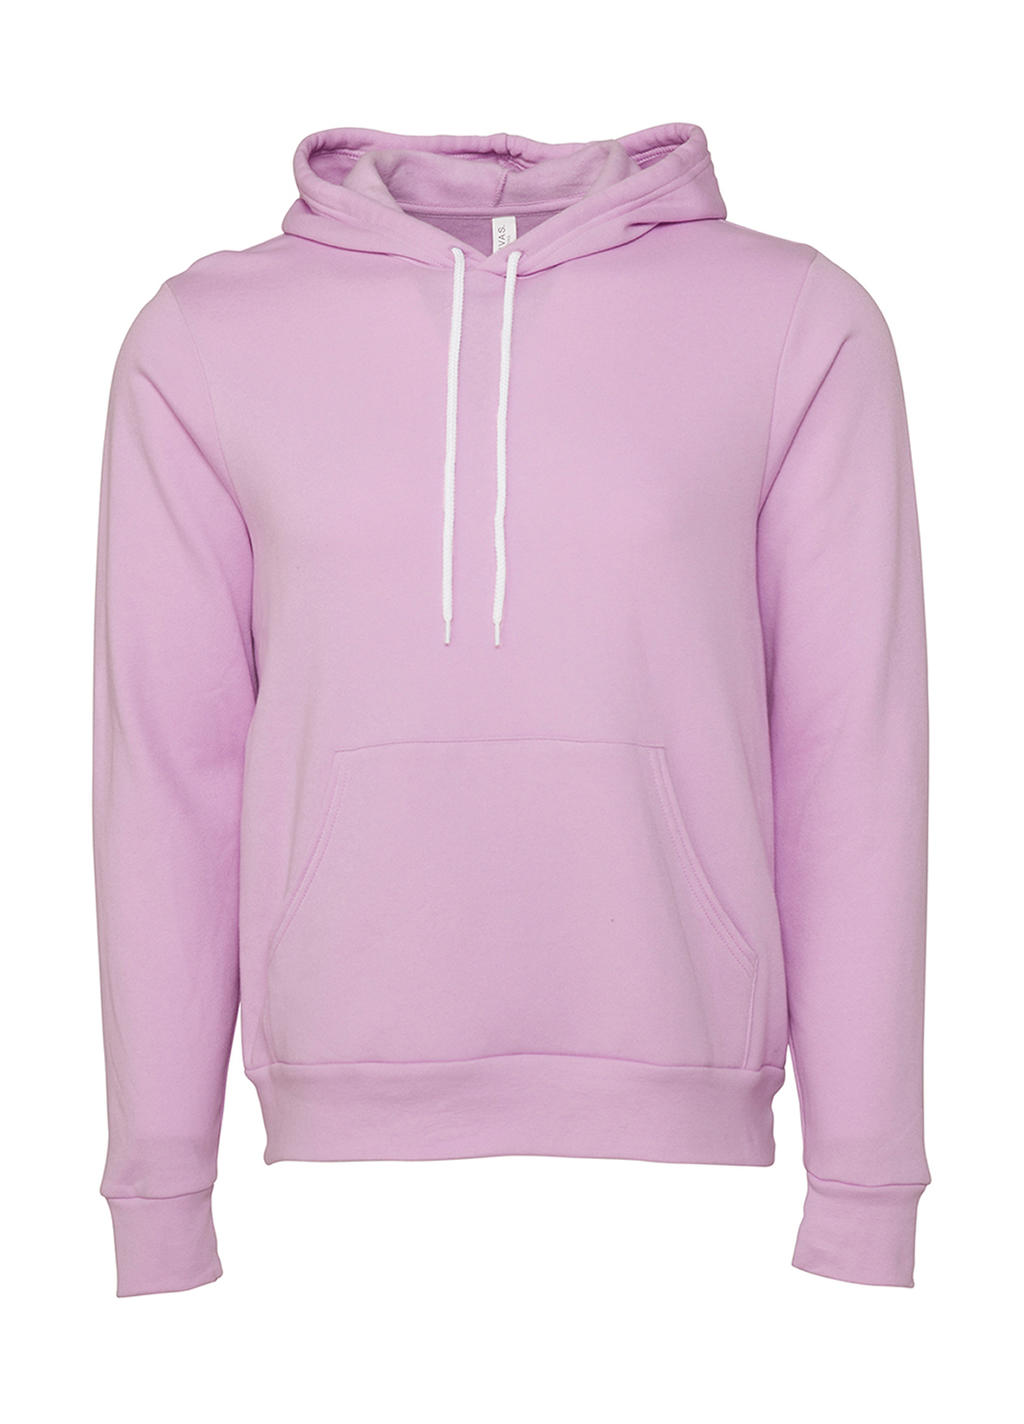 Mikina Bella Fleece Pullover - světle fialová, XL